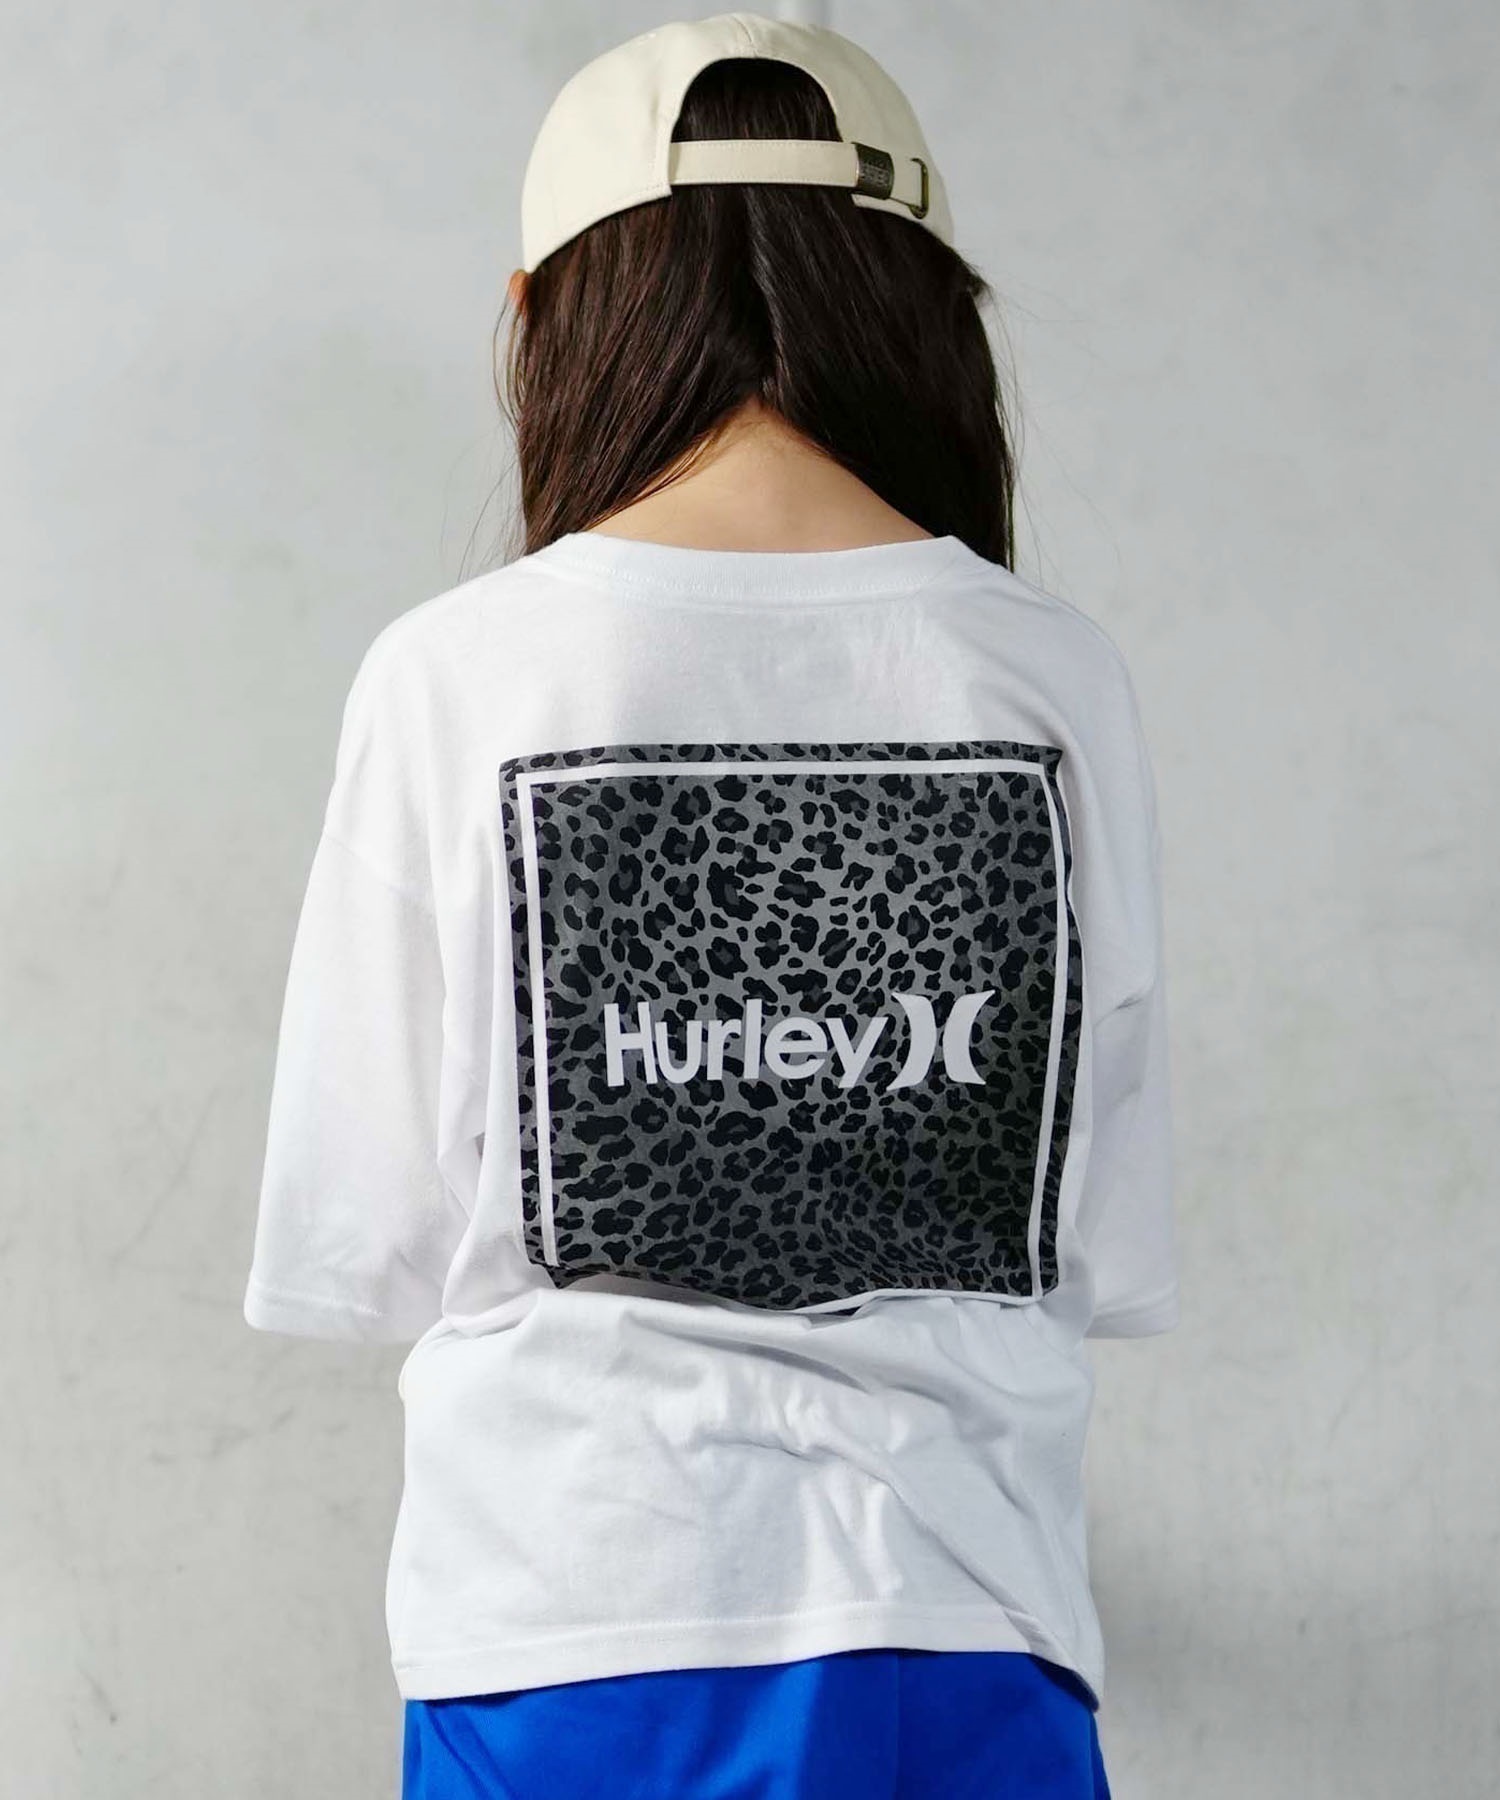 Hurley ハーレー BOYS OVERSIZE LEOPAD SQUARE SHORT SLEEVE TEE  キッズ 半袖 Tシャツ BSS2431003(CGY-130cm)